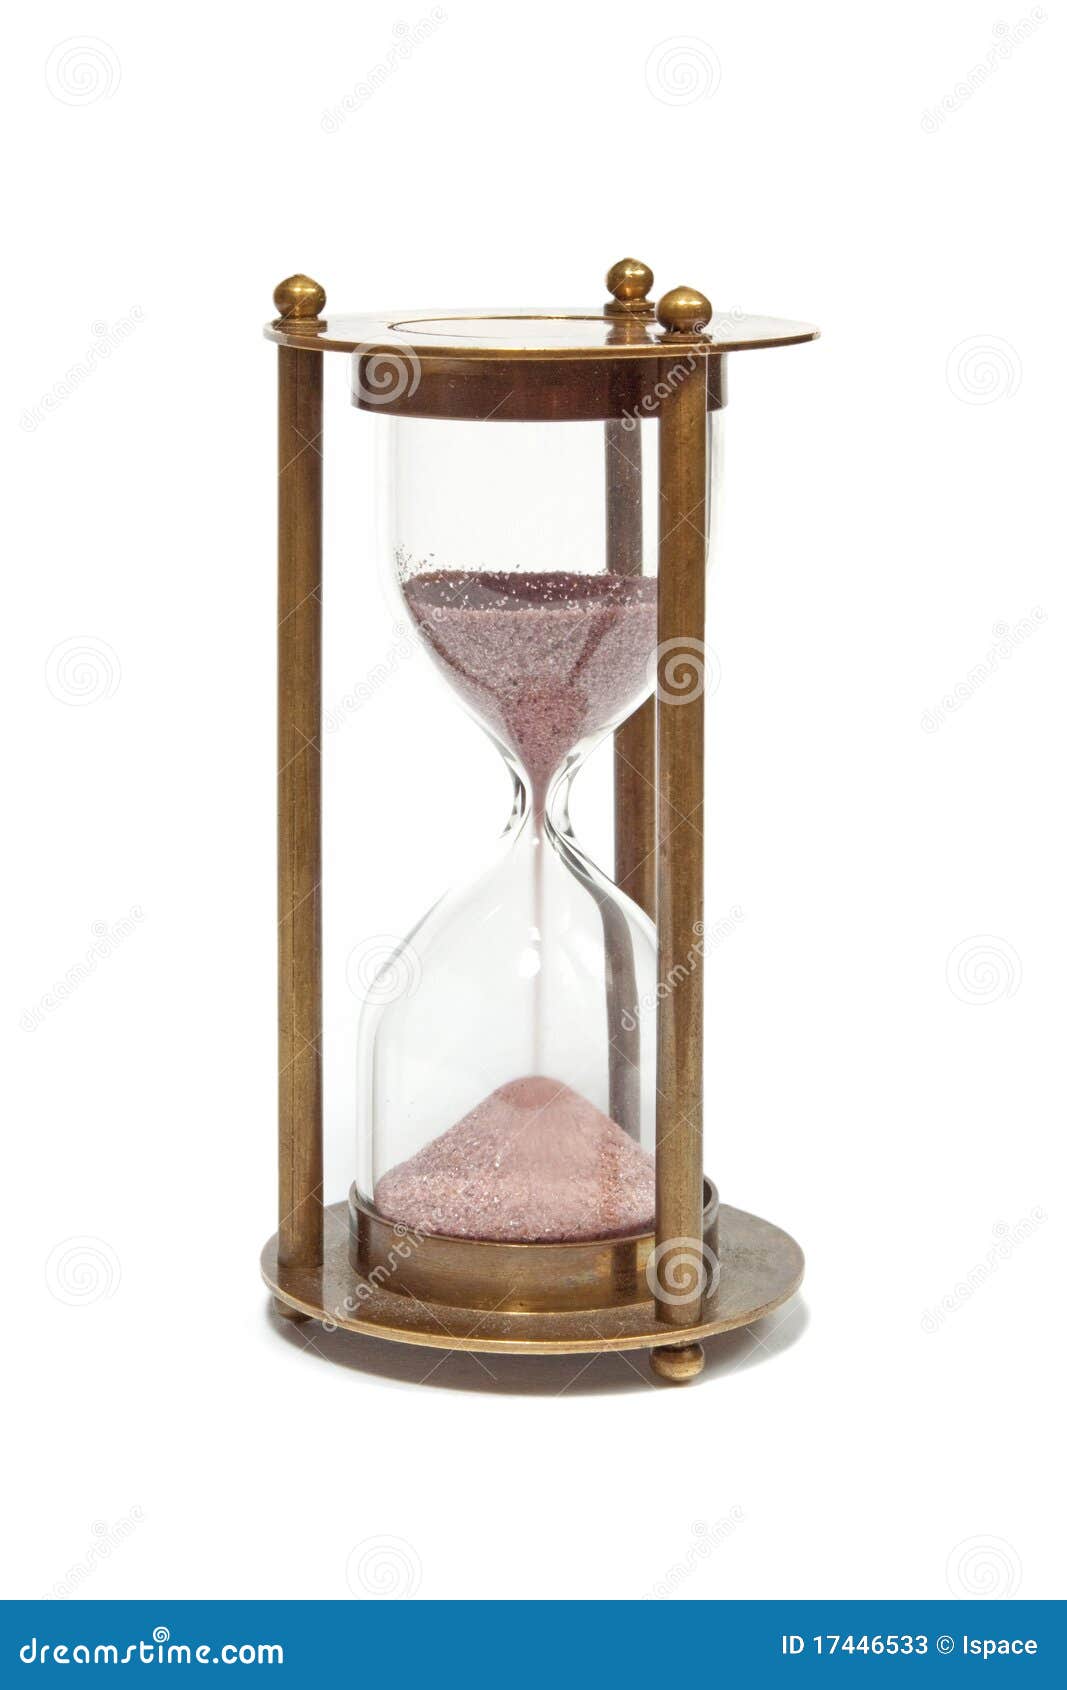 Sand clock stock image. Image of process, challenge, fashioned - 17446533